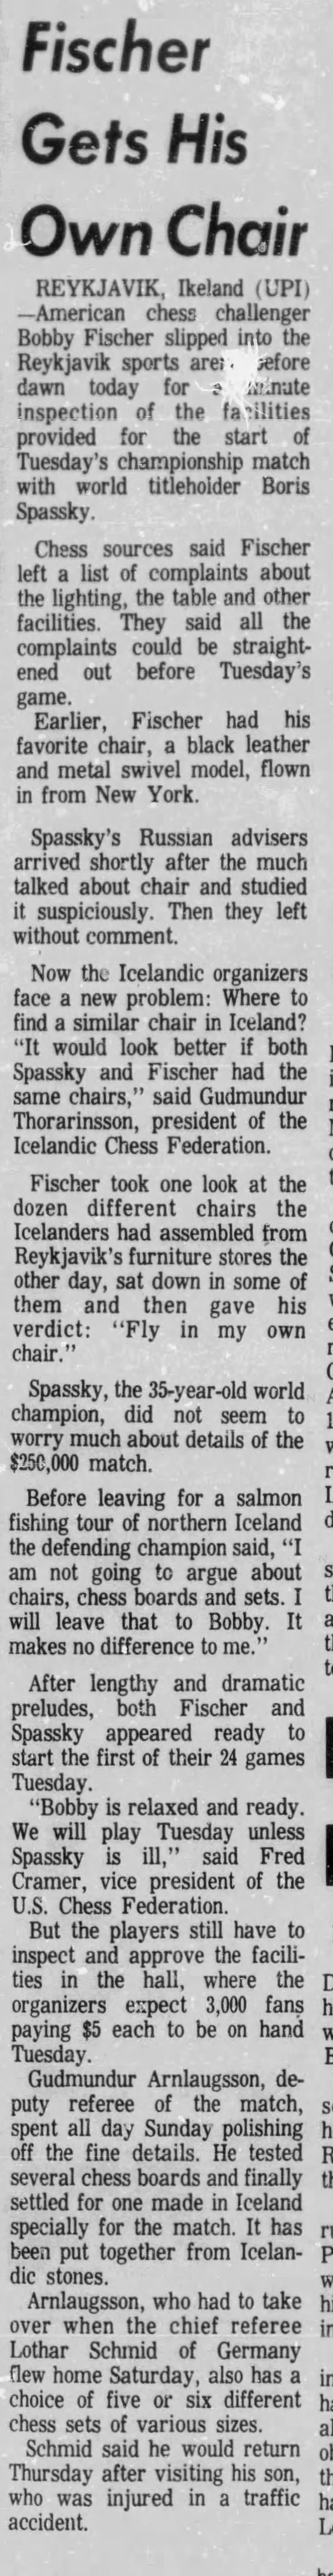 Fischer Gets His Own Chair